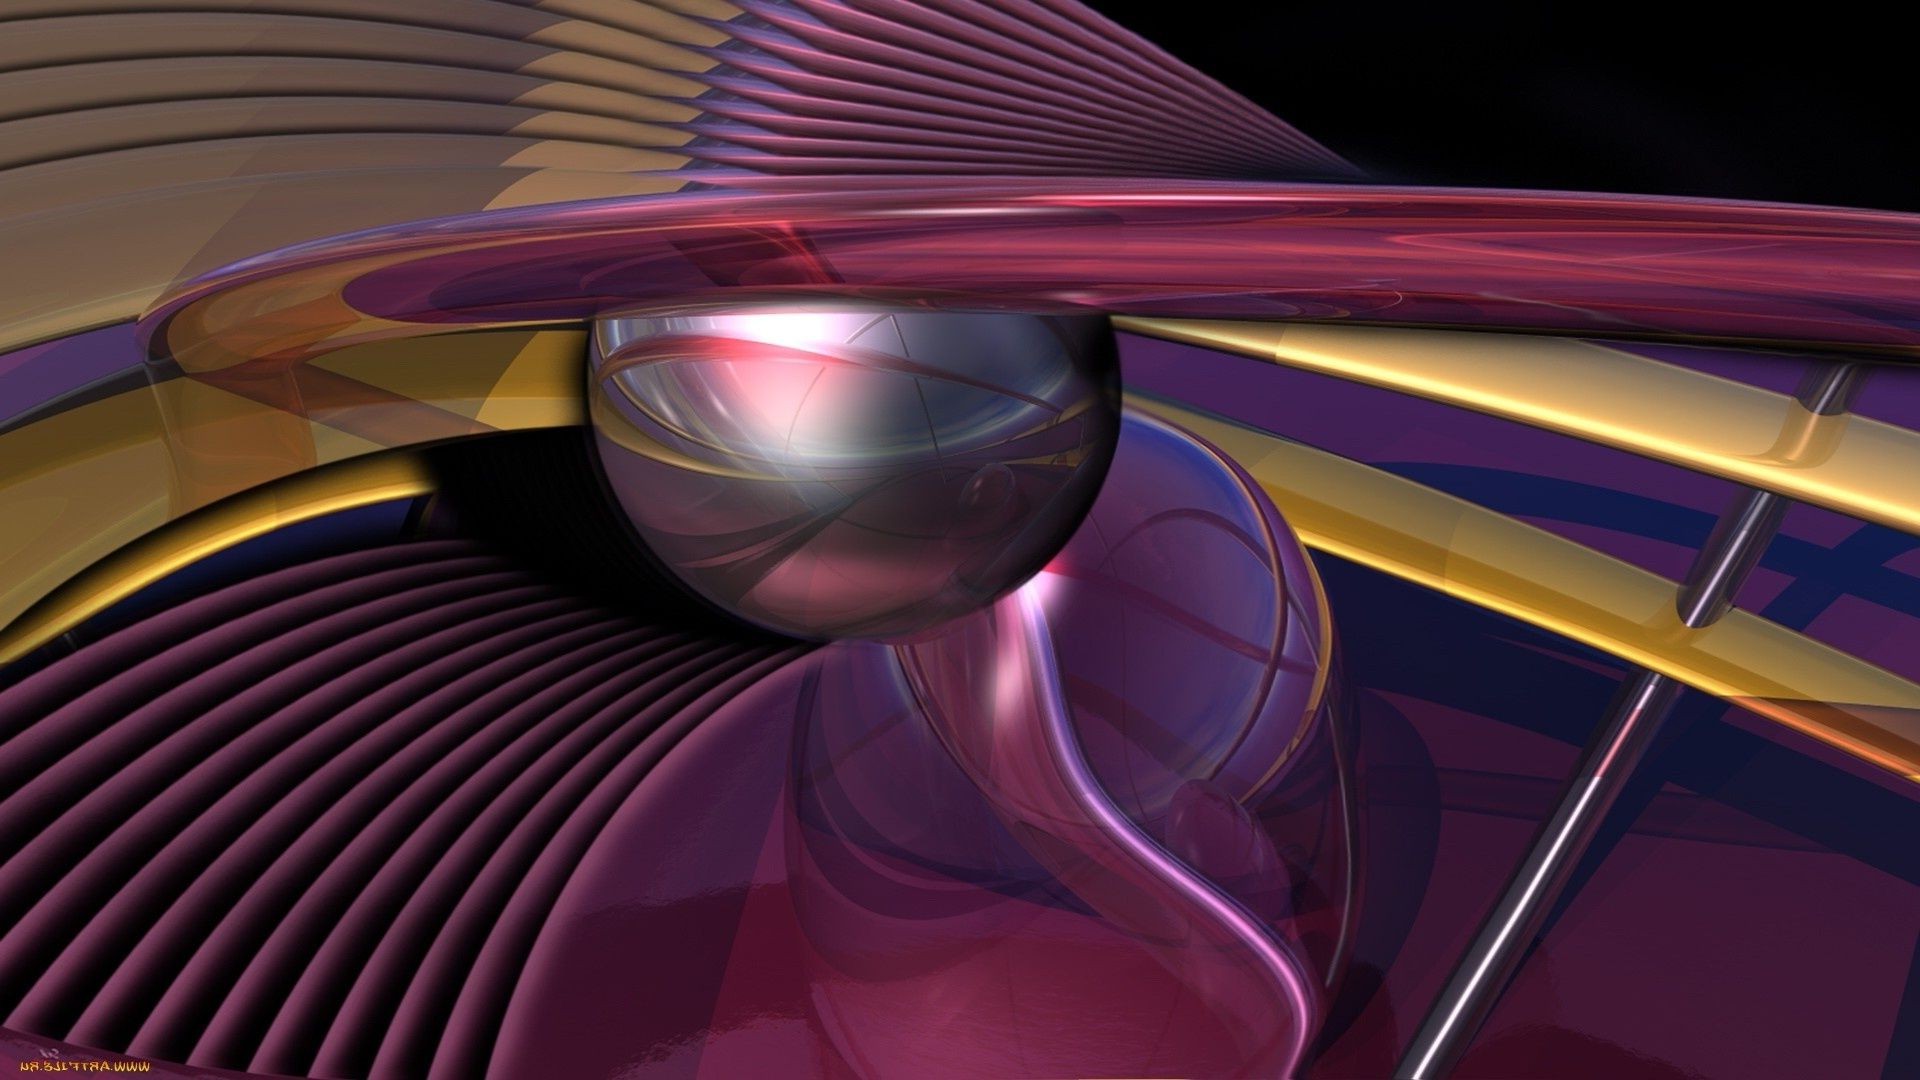 Geometric Shapes Abstract Design Futuristic Light Illustration - Luxury Vehicle - HD Wallpaper 